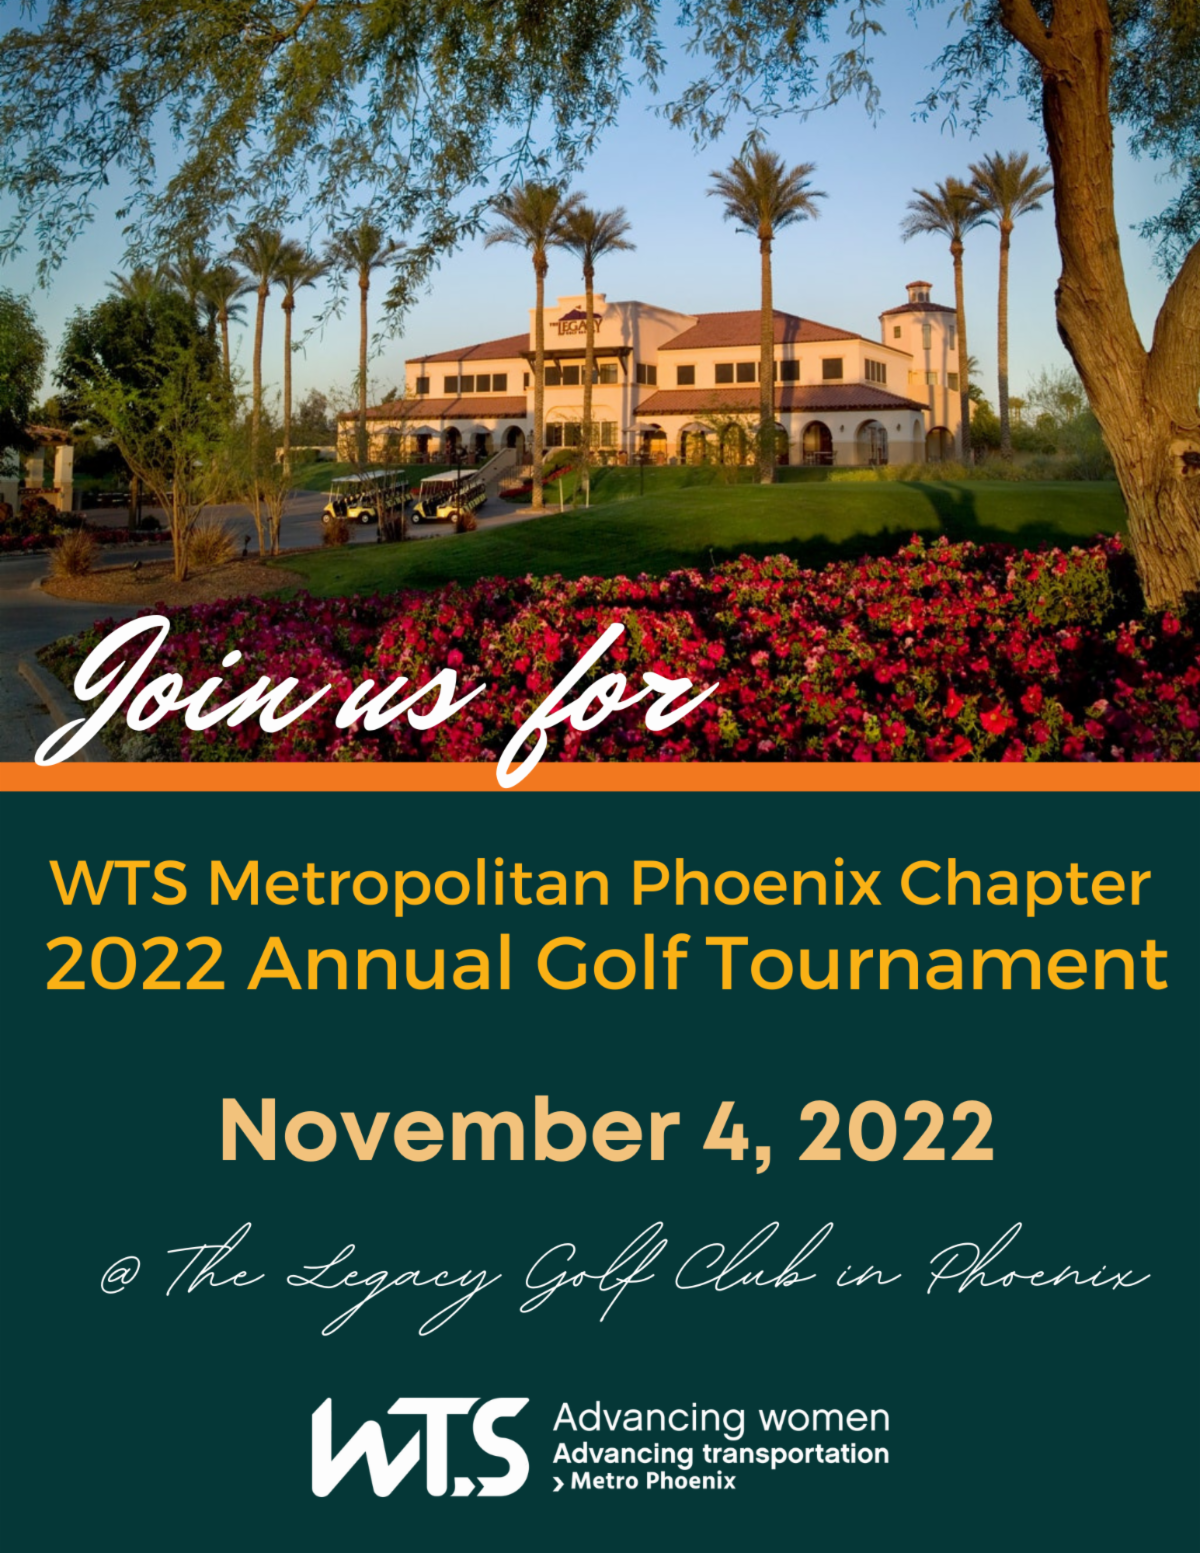 WTS Metro Phoenix 2022 Annual Golf Tournament